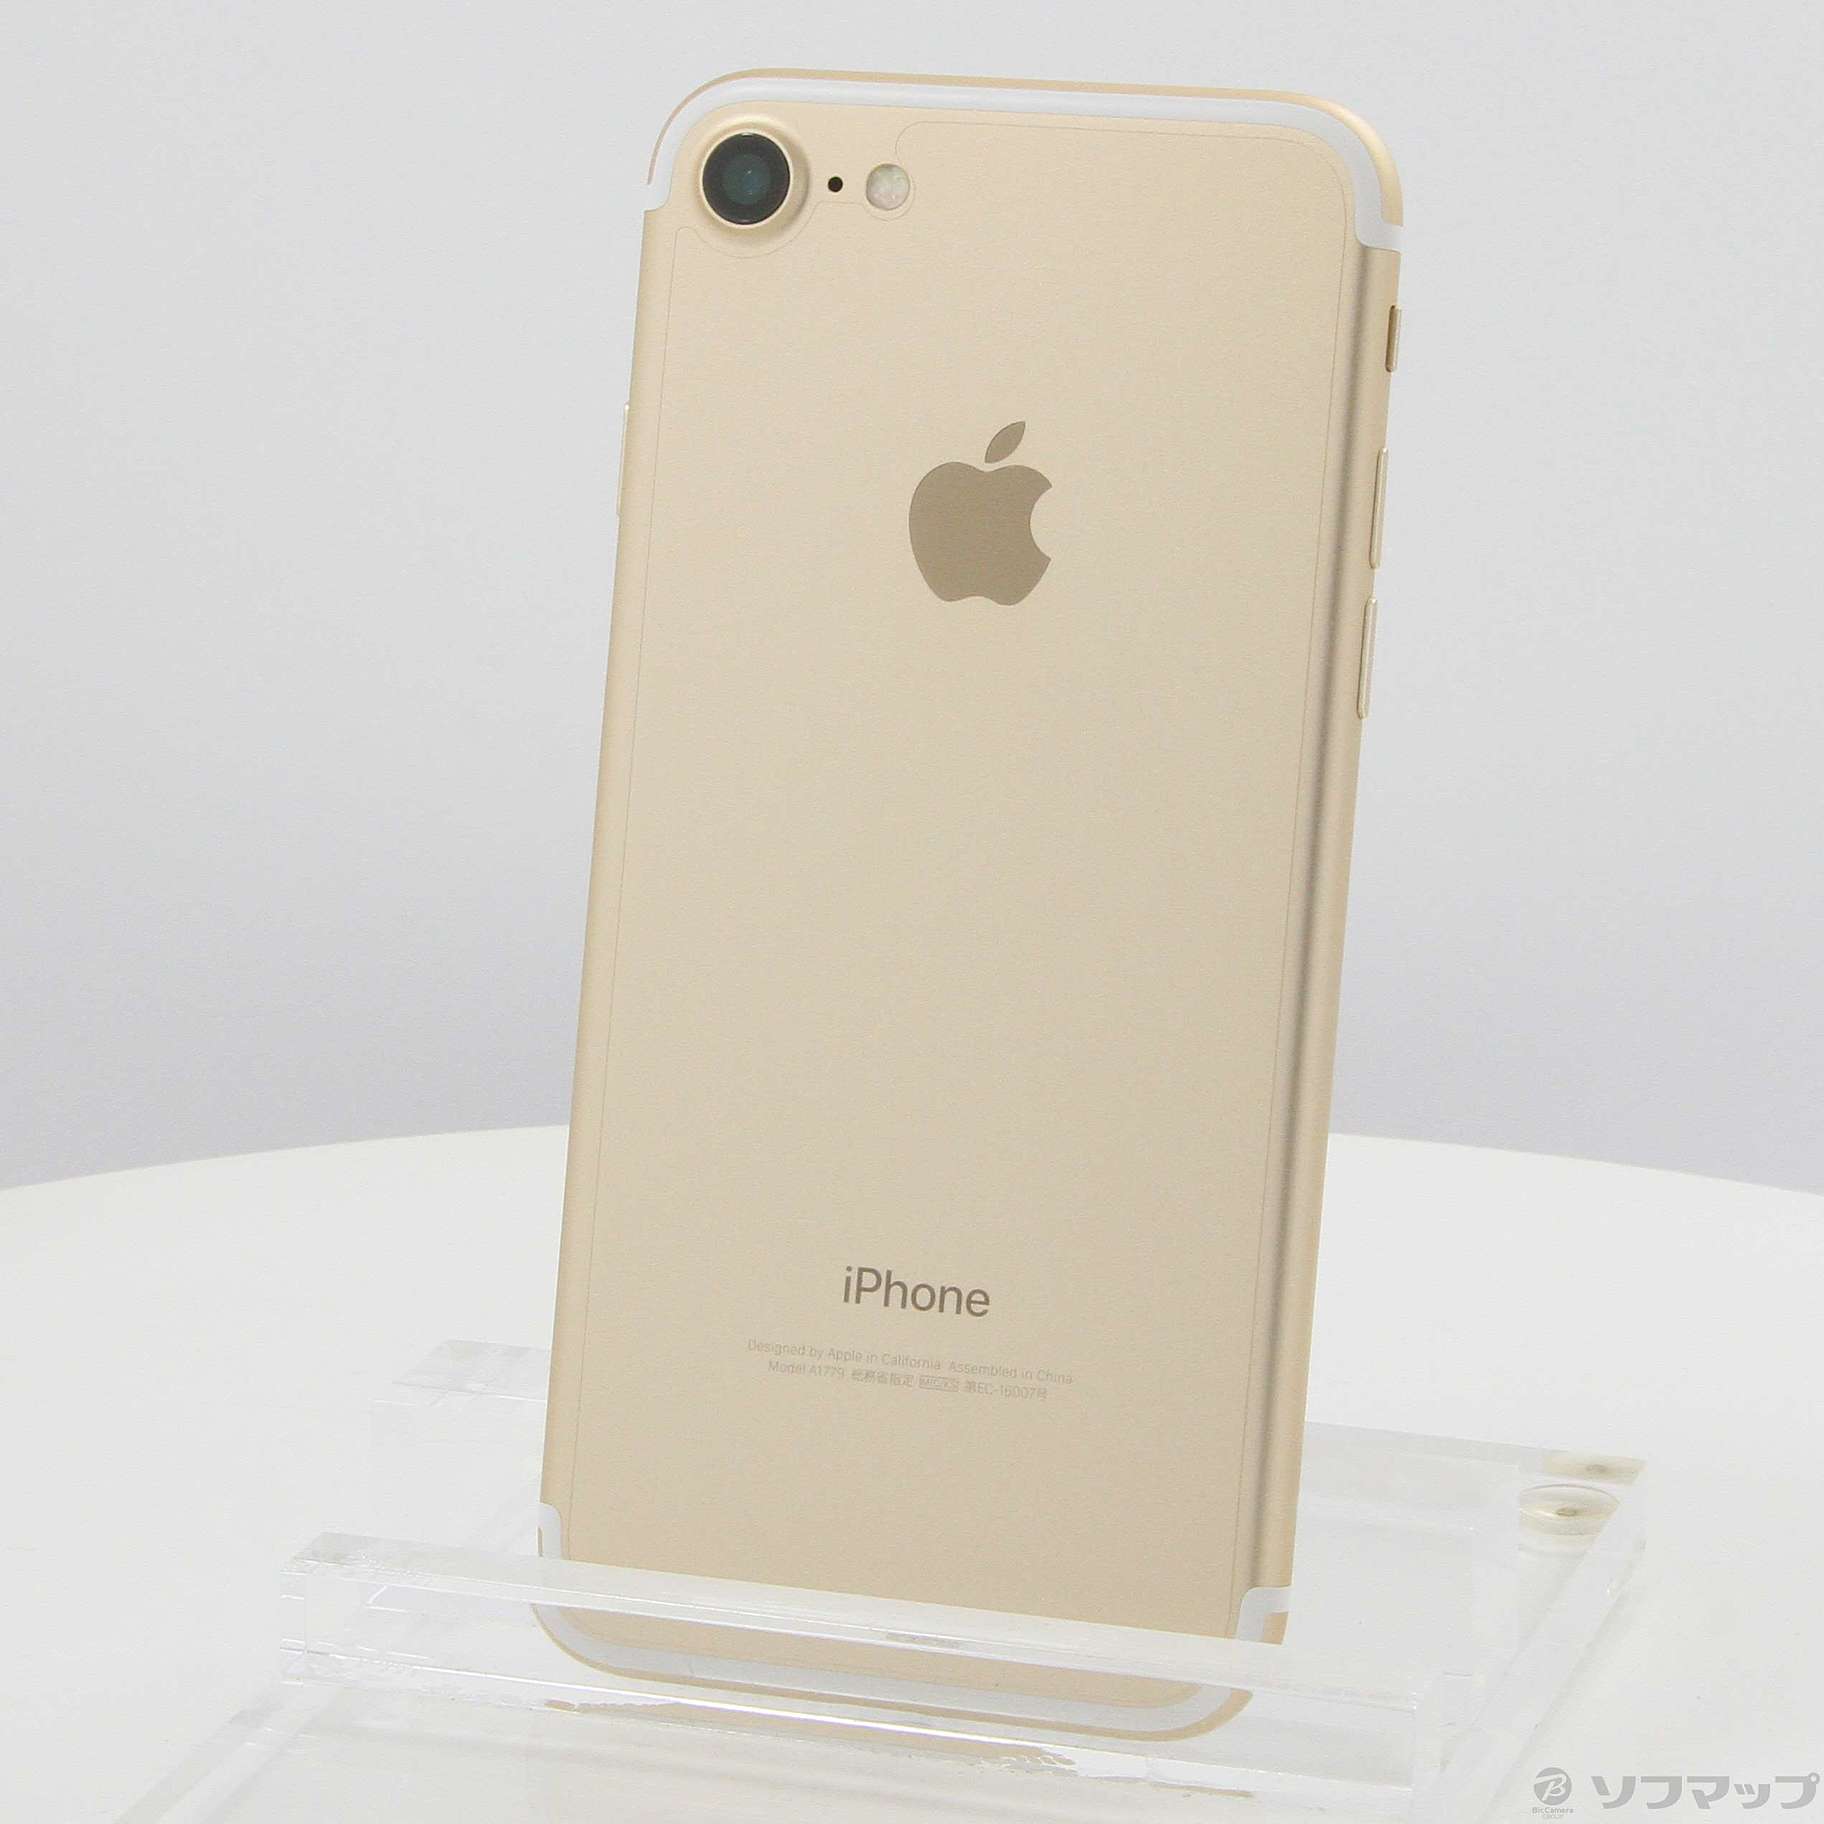 iPhone7 128GB Gold Softbank - スマートフォン本体